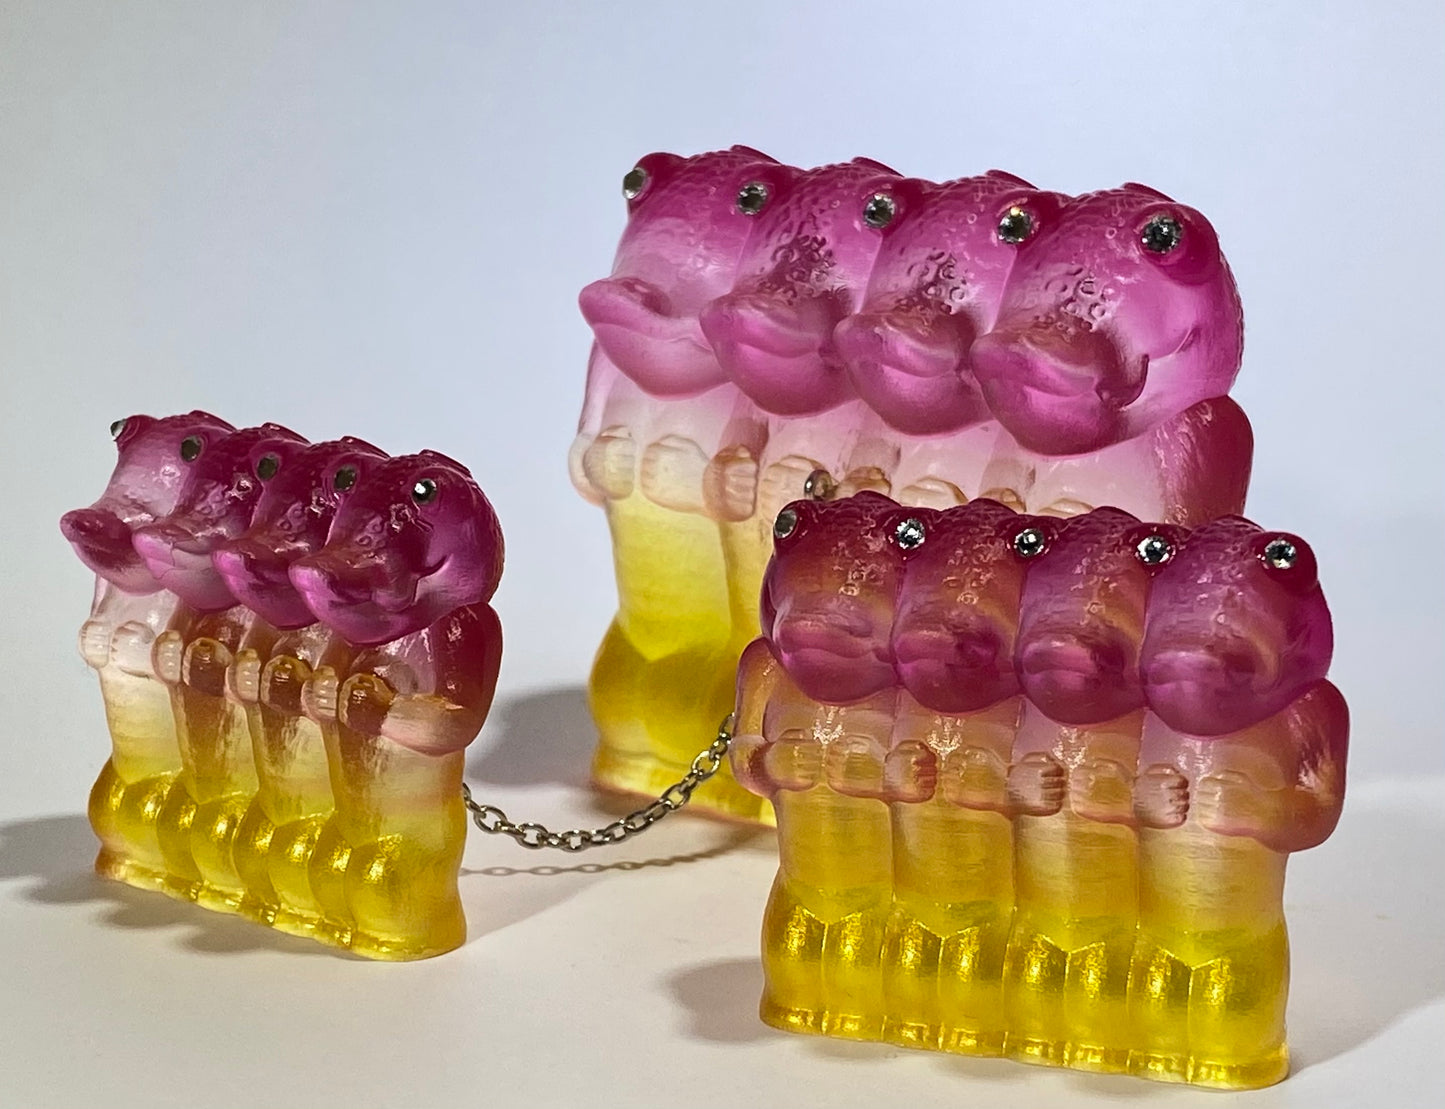 Crocodile Ape Cult: 4 Headed Pink Lemonade Freak-o Gang